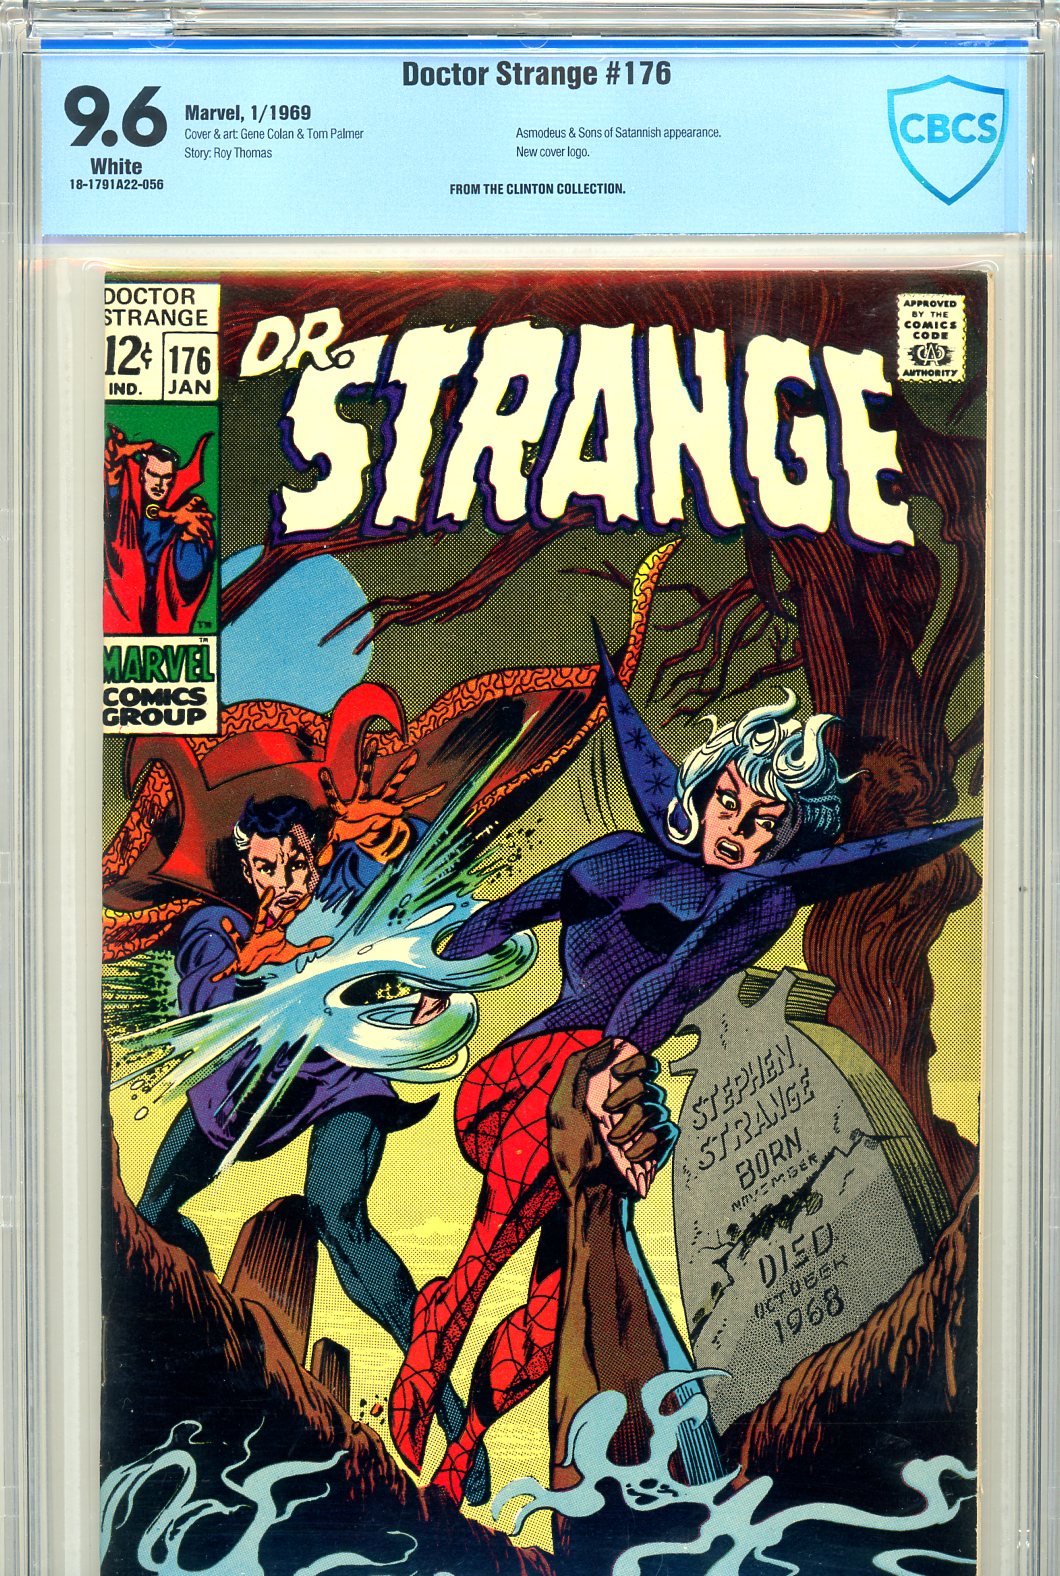 Doctor Strange #176 CBCS 9.6 w